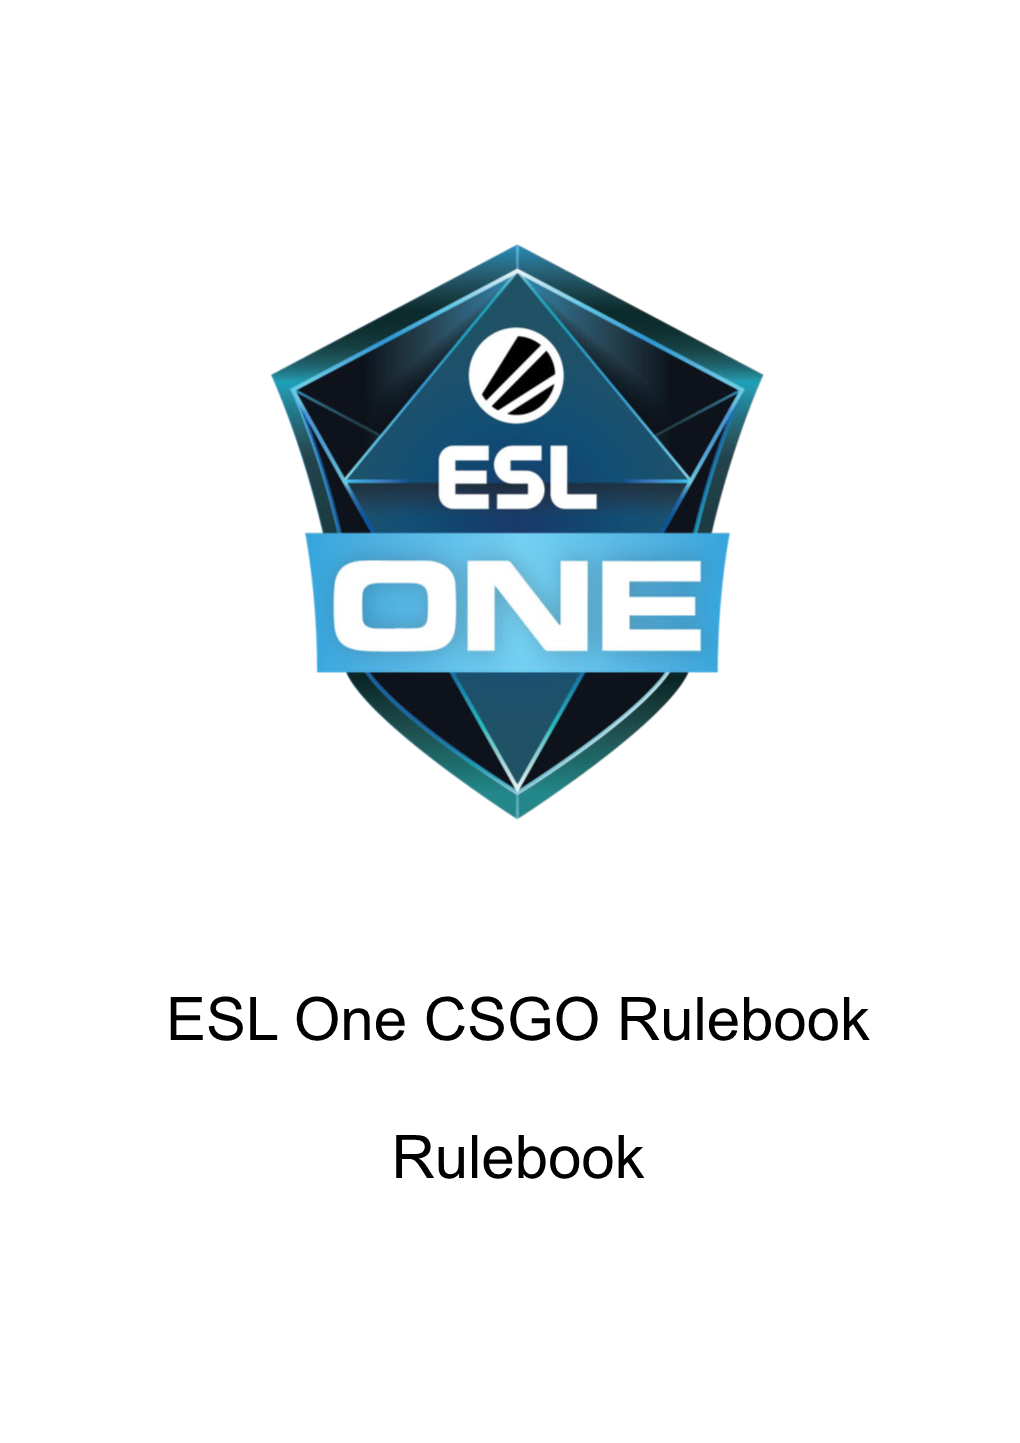 ESL One CSGO Rulebook 2018